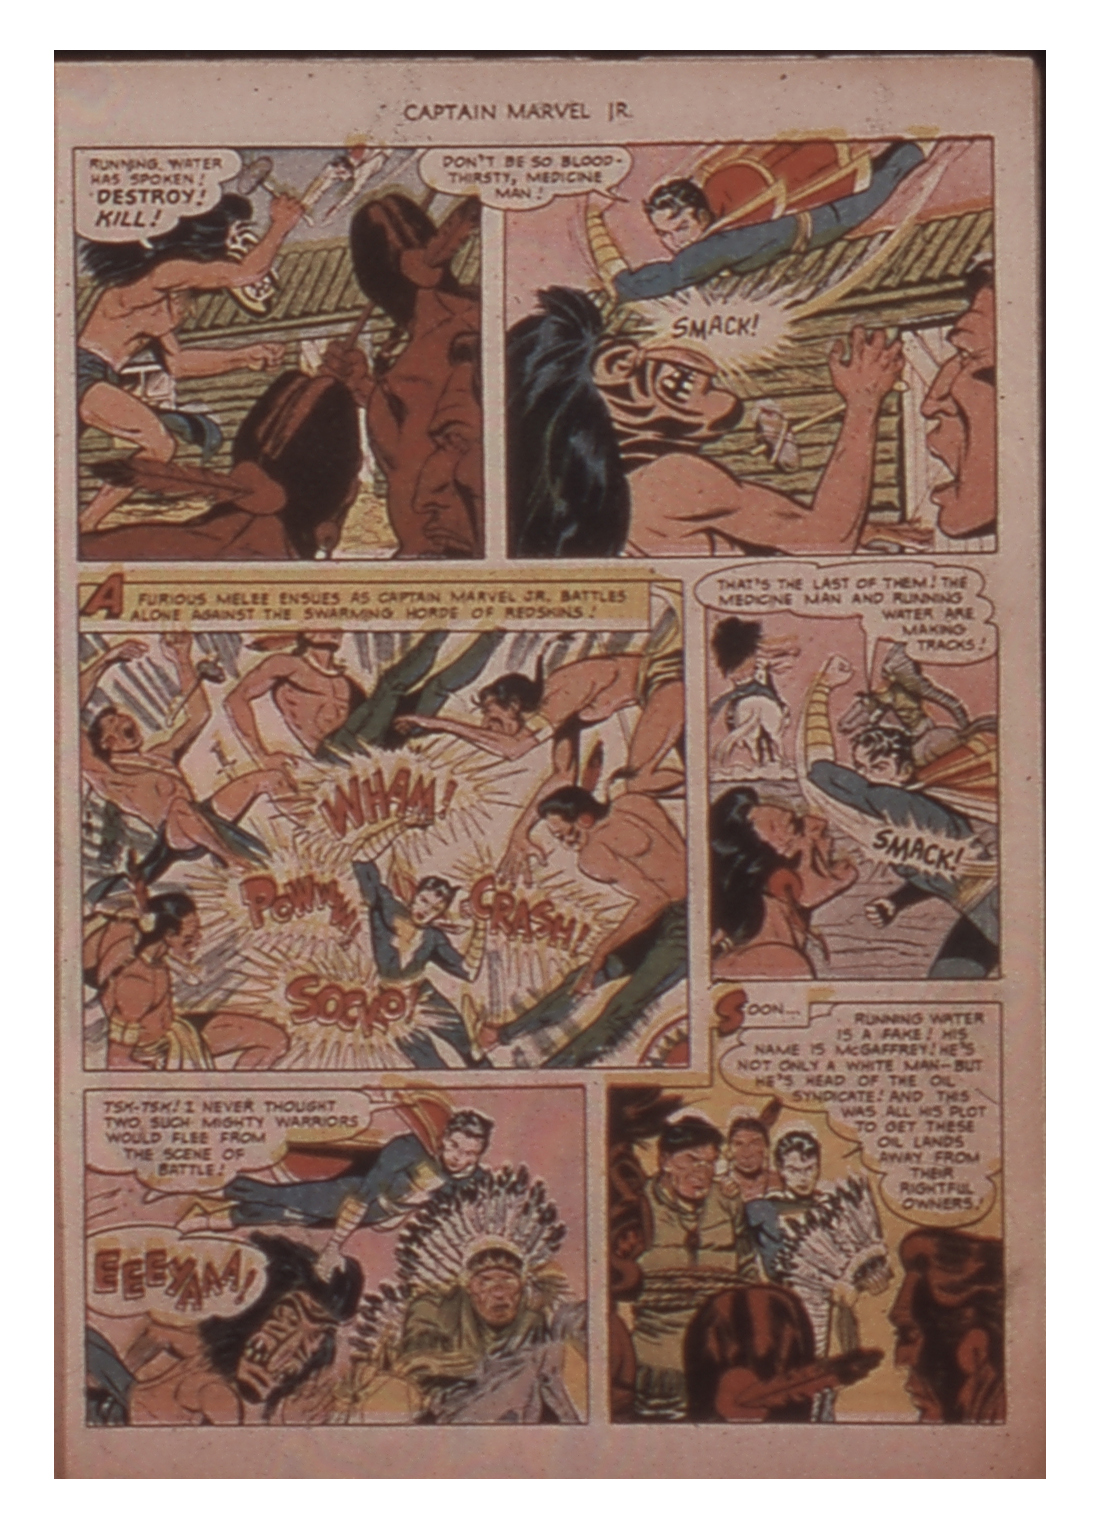 Read online Captain Marvel, Jr. comic -  Issue #94 - 11